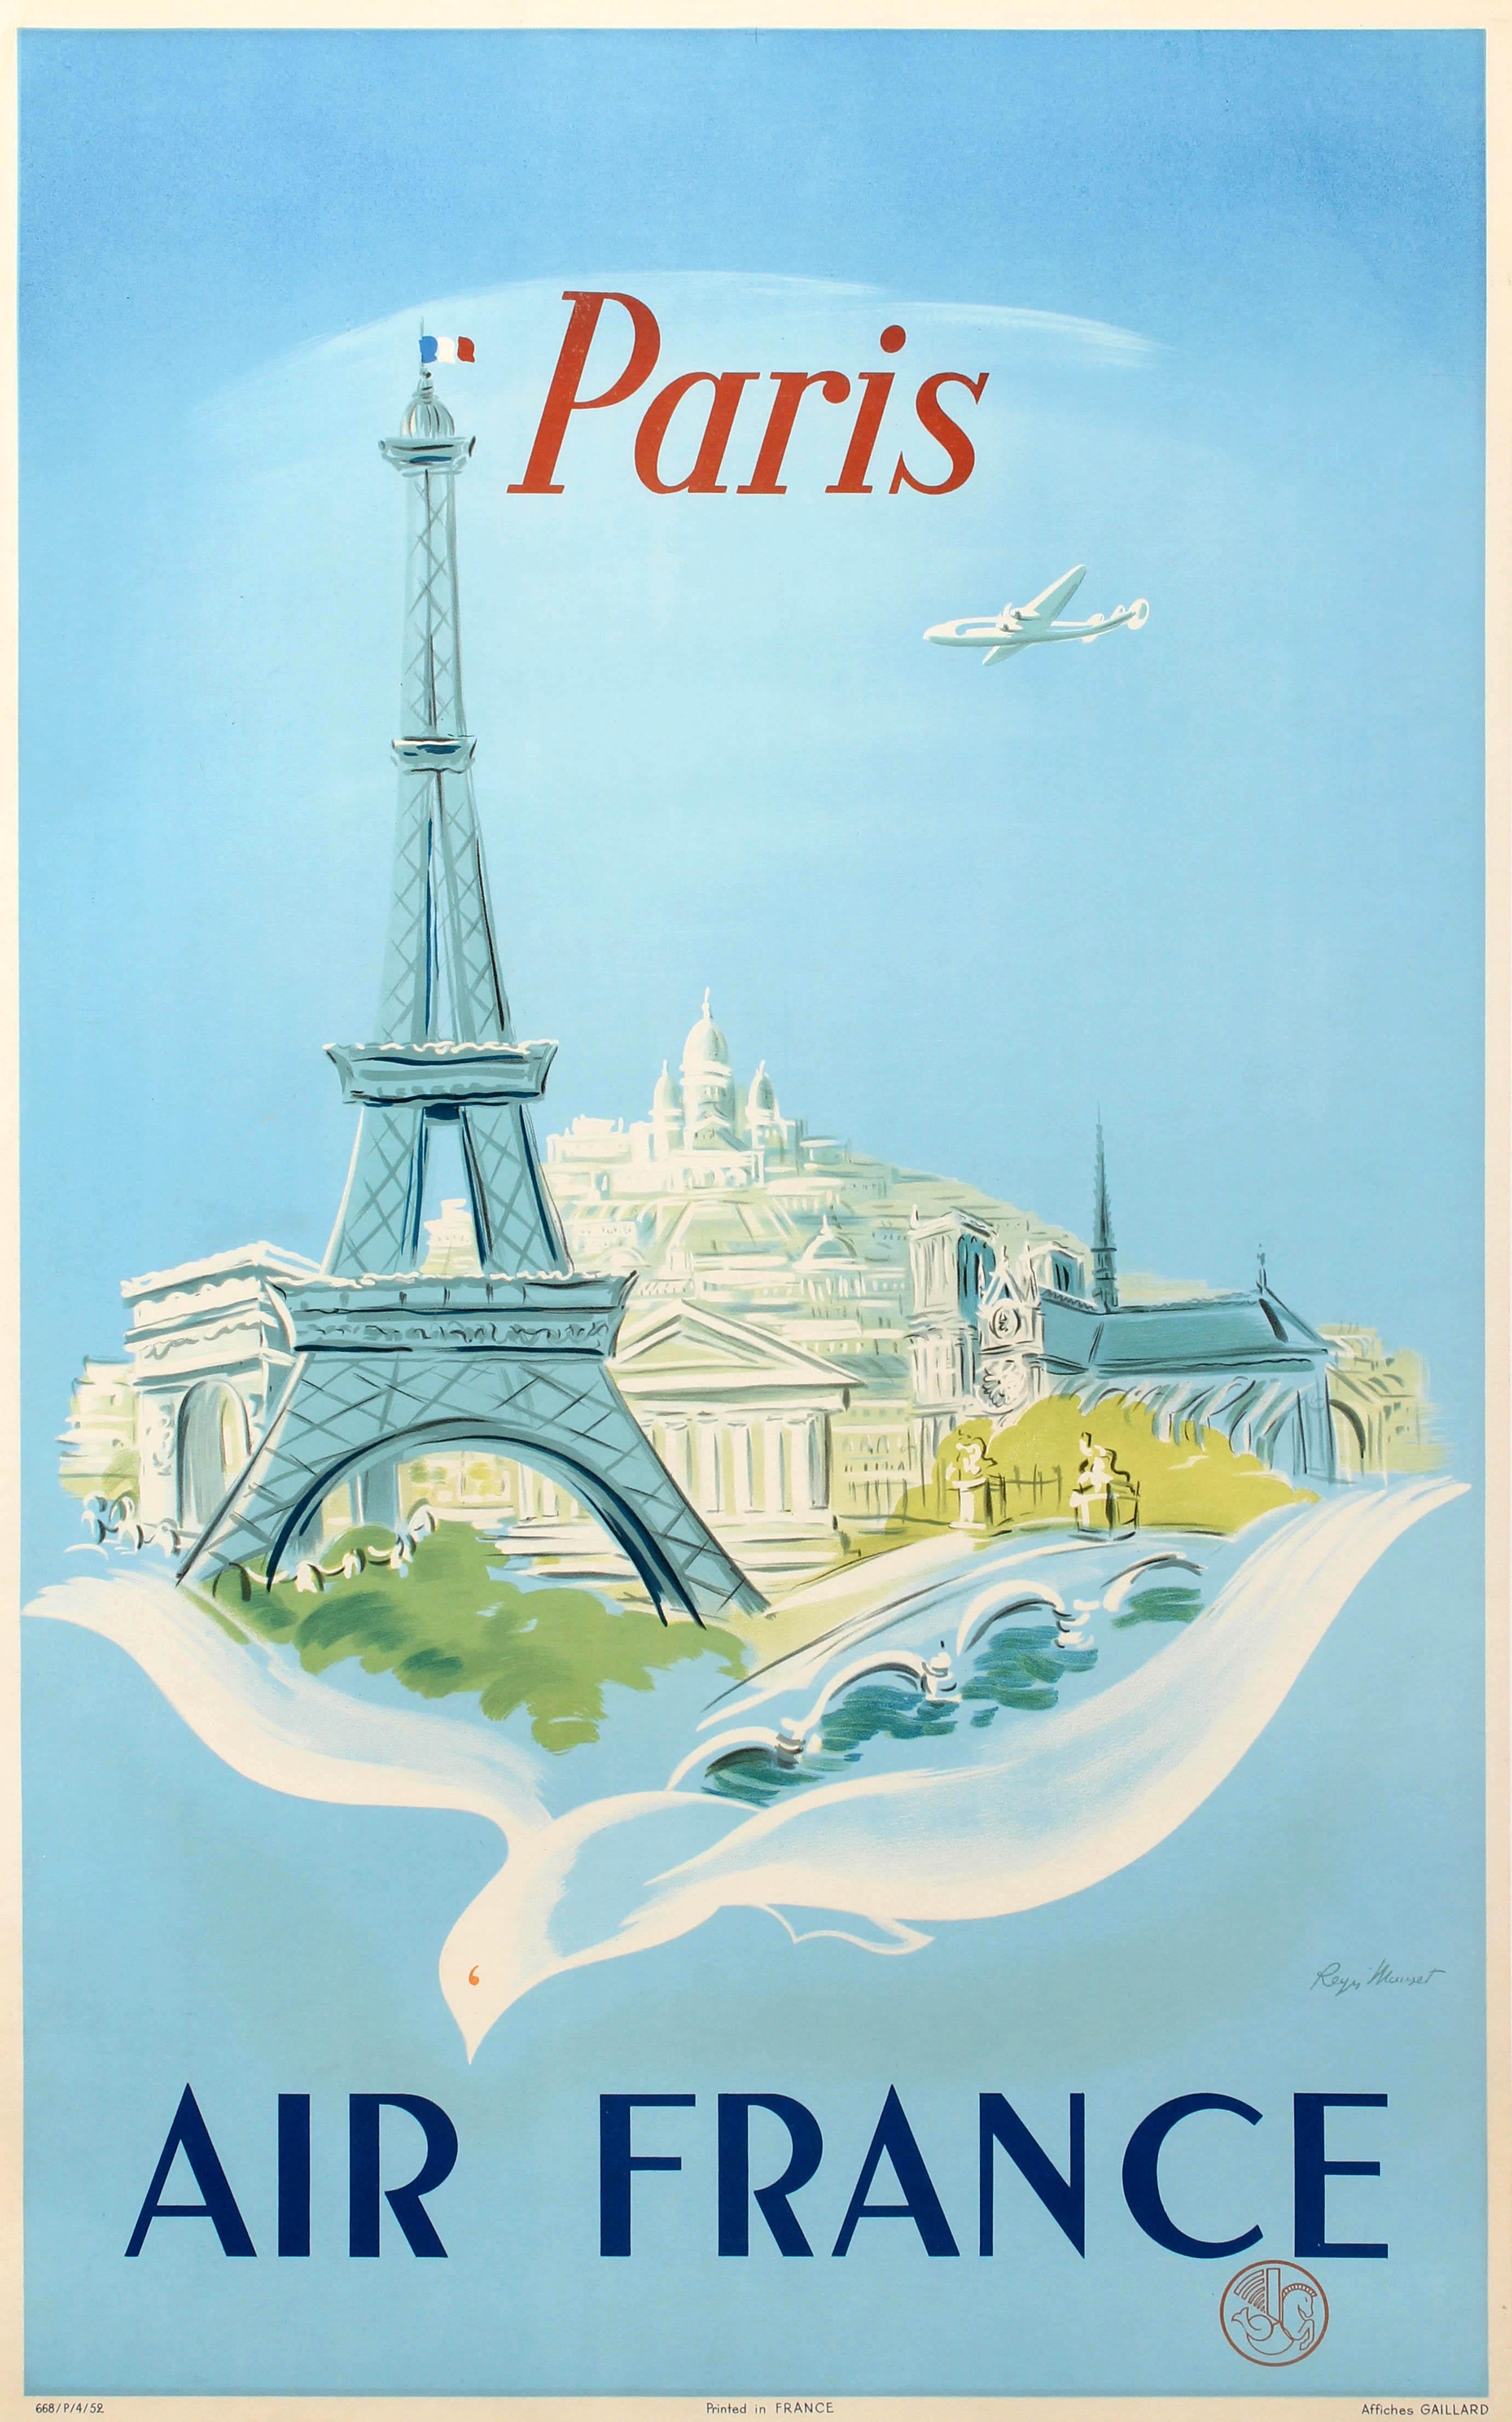 Regis Manset Print - Original Vintage Air France Poster Paris Ft. Eiffel Tower Lockheed Constellation